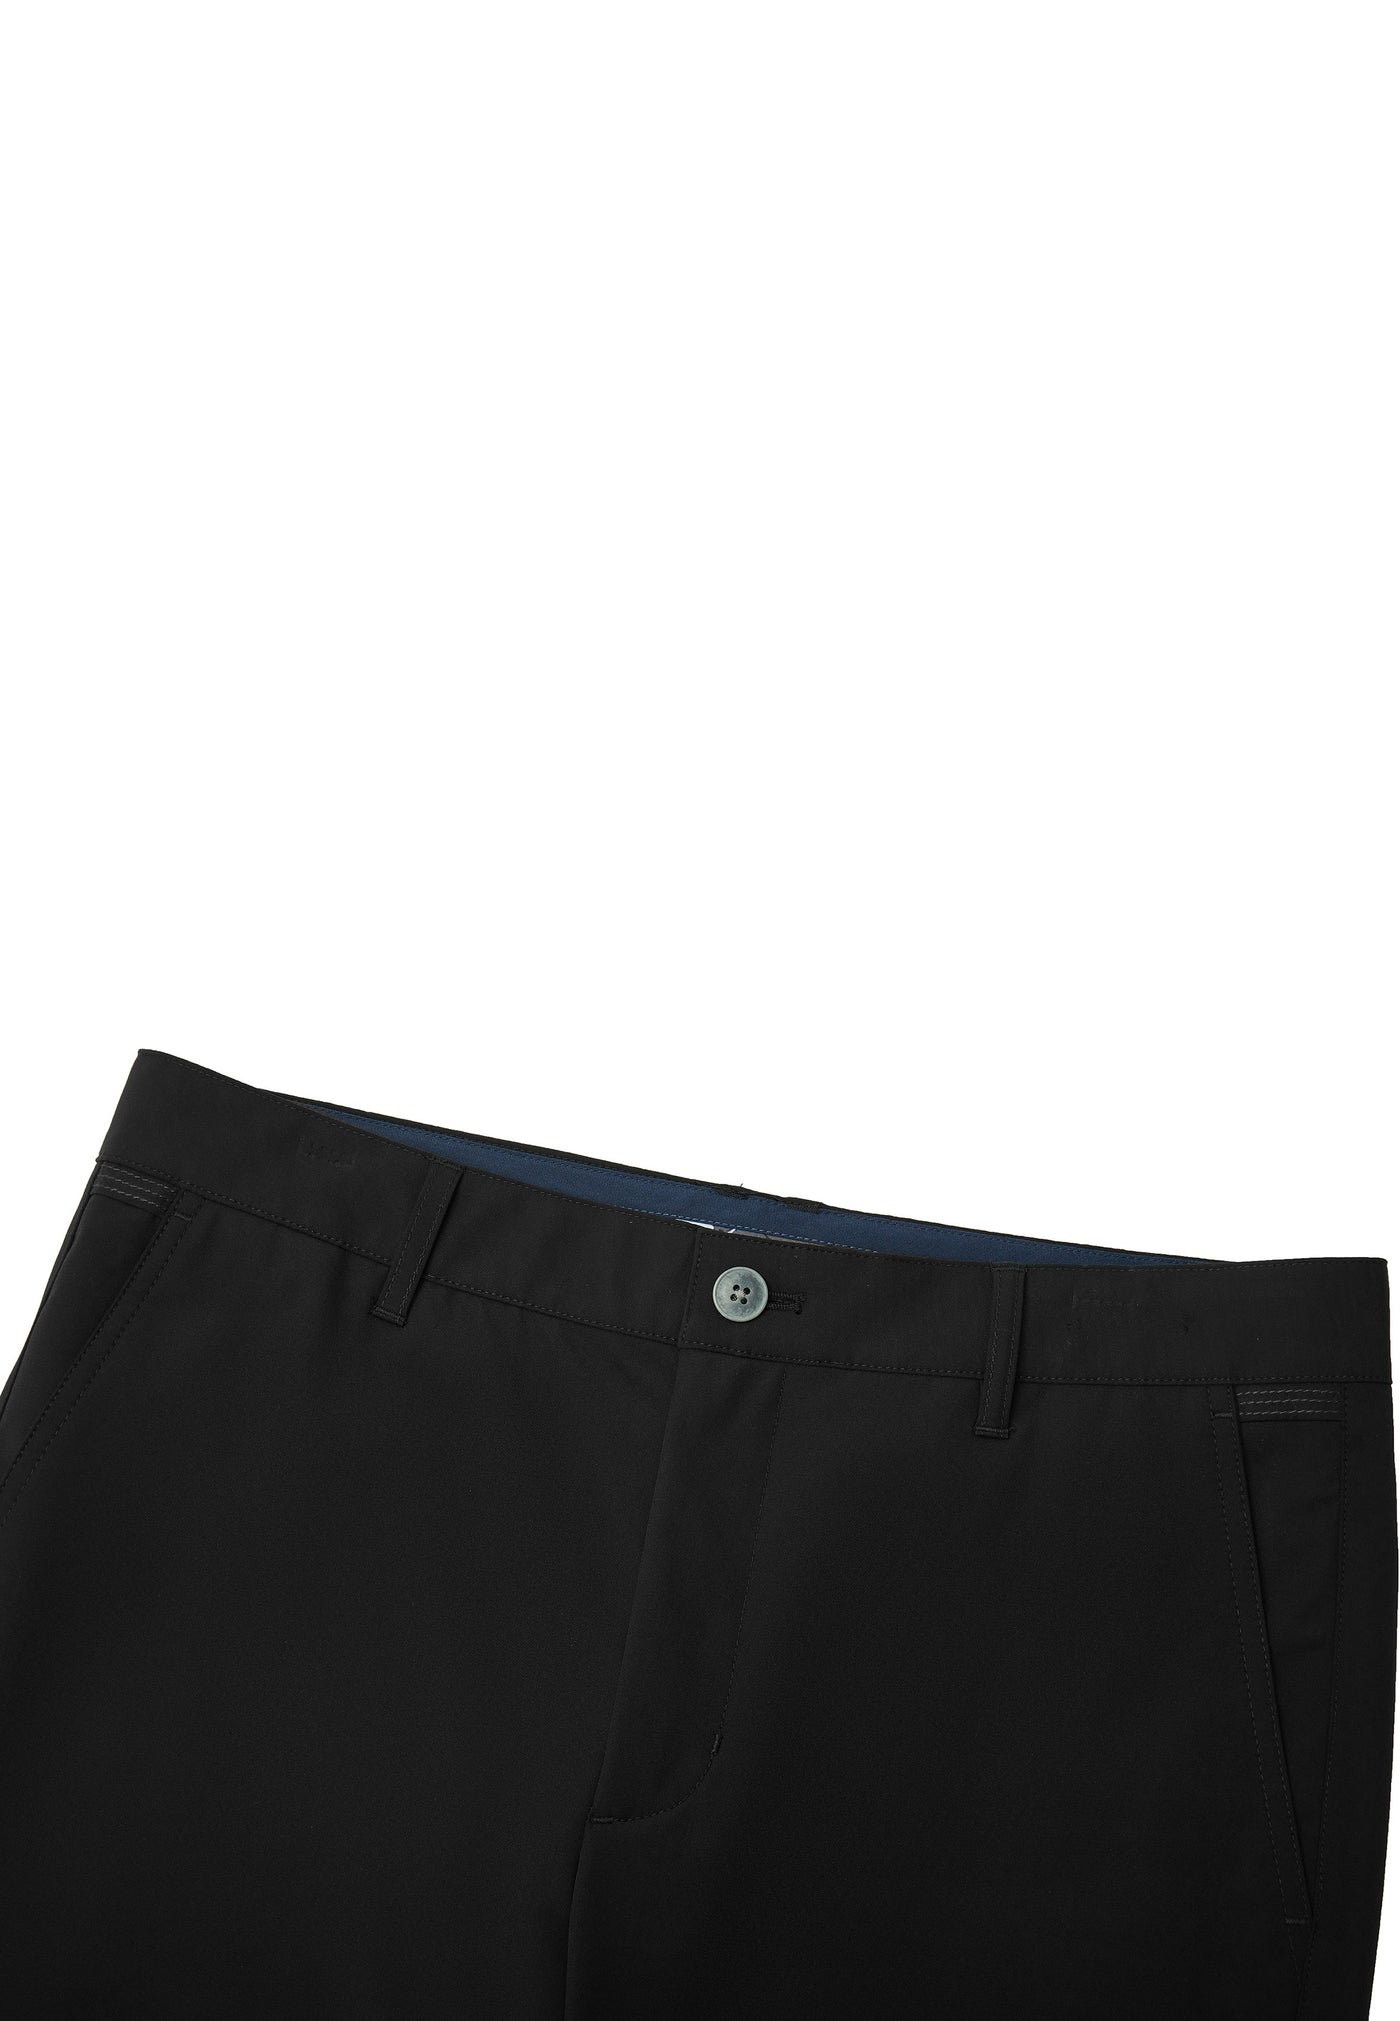 Men Clothing Multi-Way Strech Informal Pants Extra Slim Fit